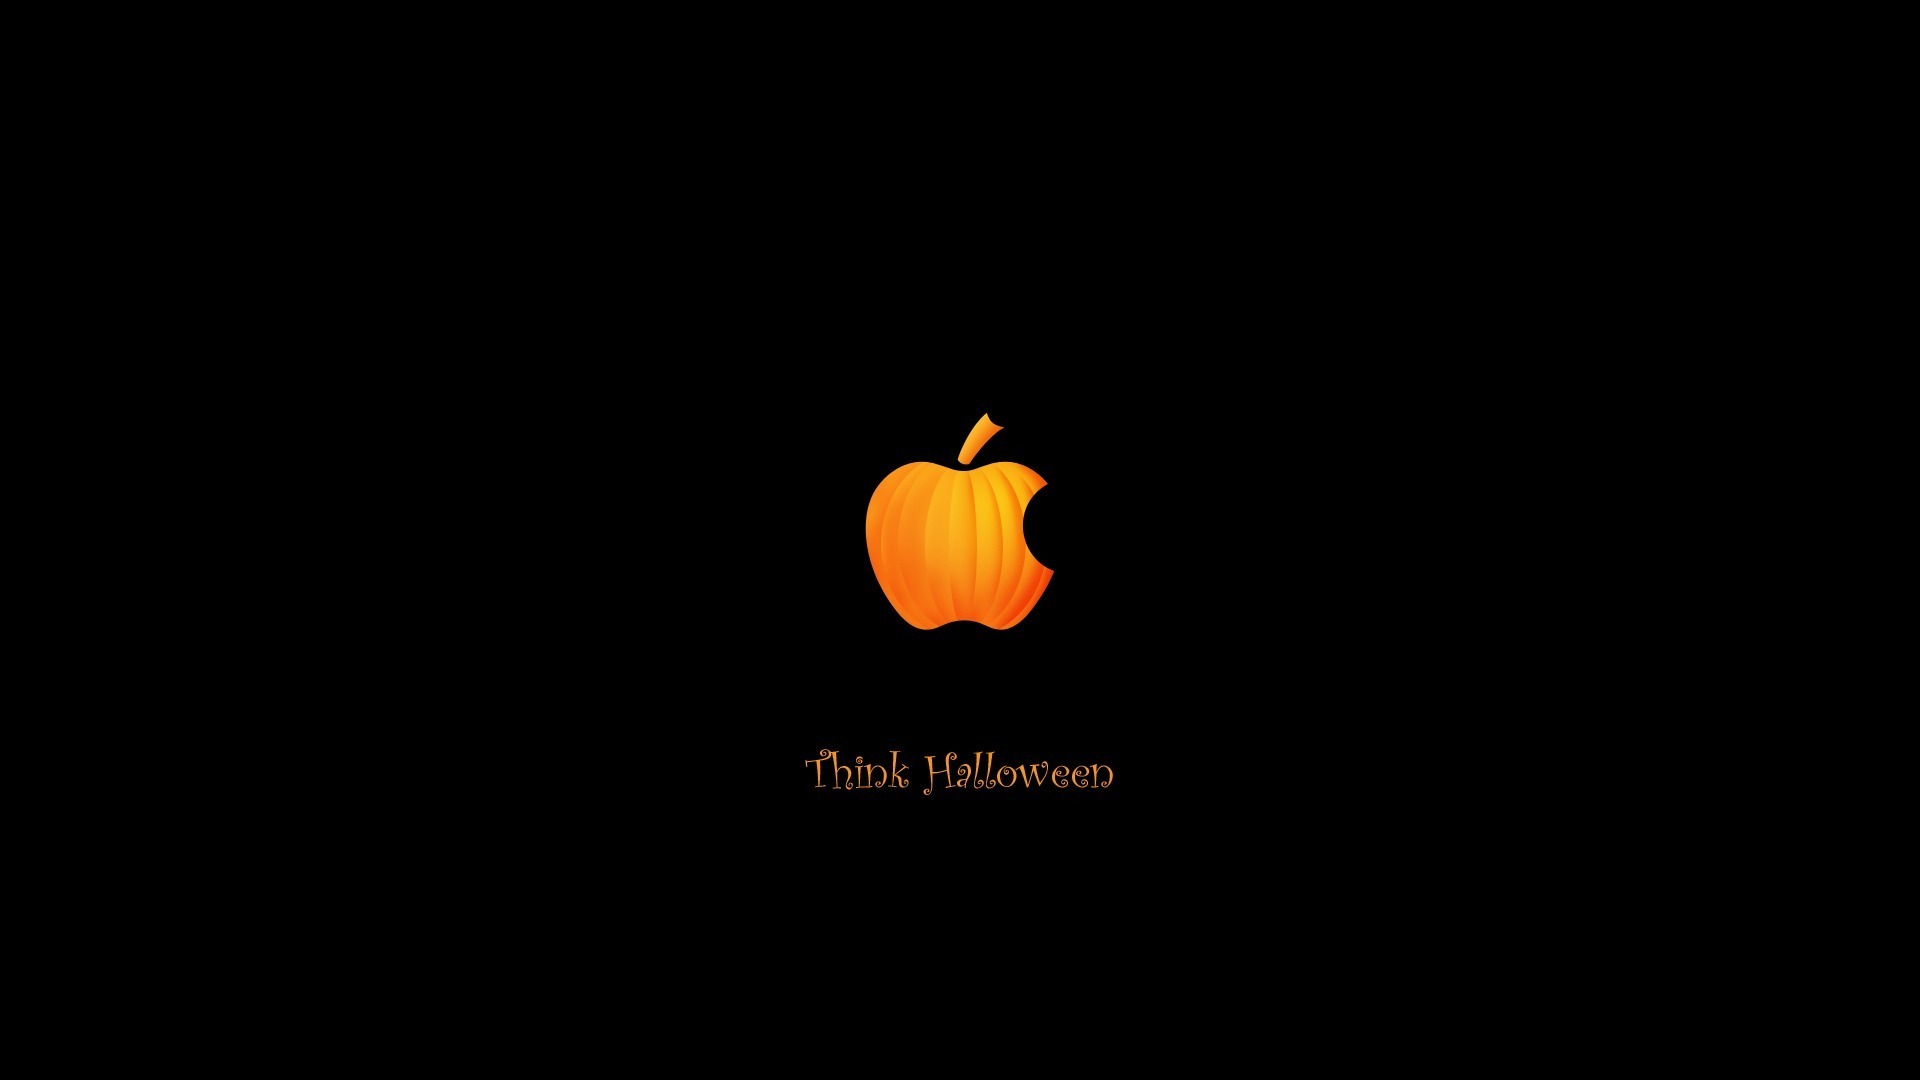 General 1920x1080 Halloween Apple Inc. pumpkin black background brand